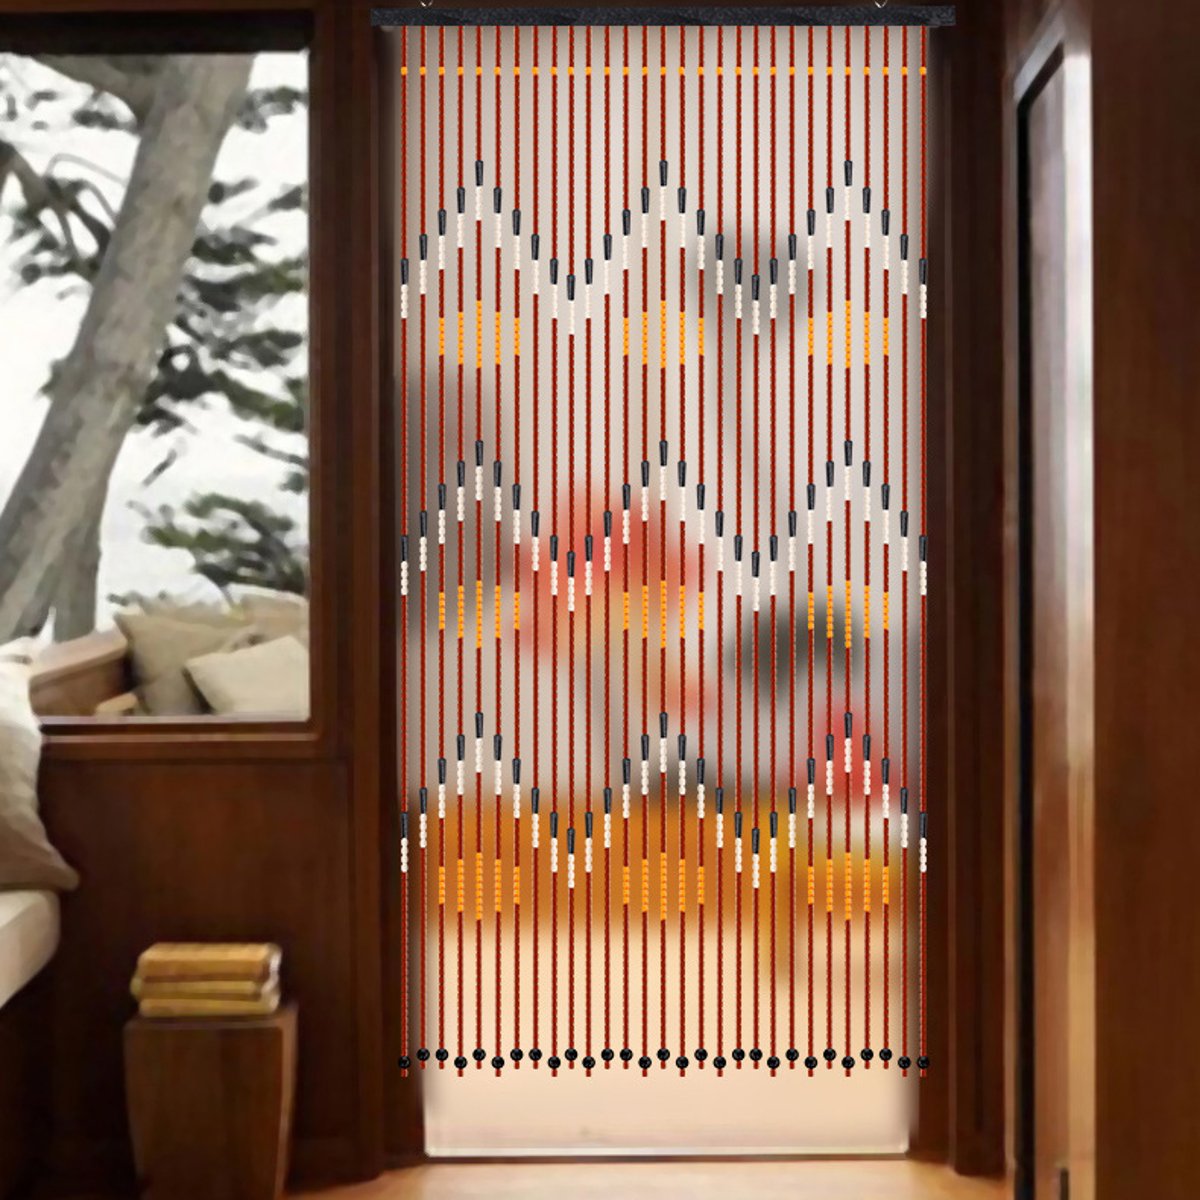 Molare 31 Line Wooden Bead Curtain Handmade Fly Screen Door Window Curtain Blinds for Porch Bedroom Living Room Bathroom,90x220CM